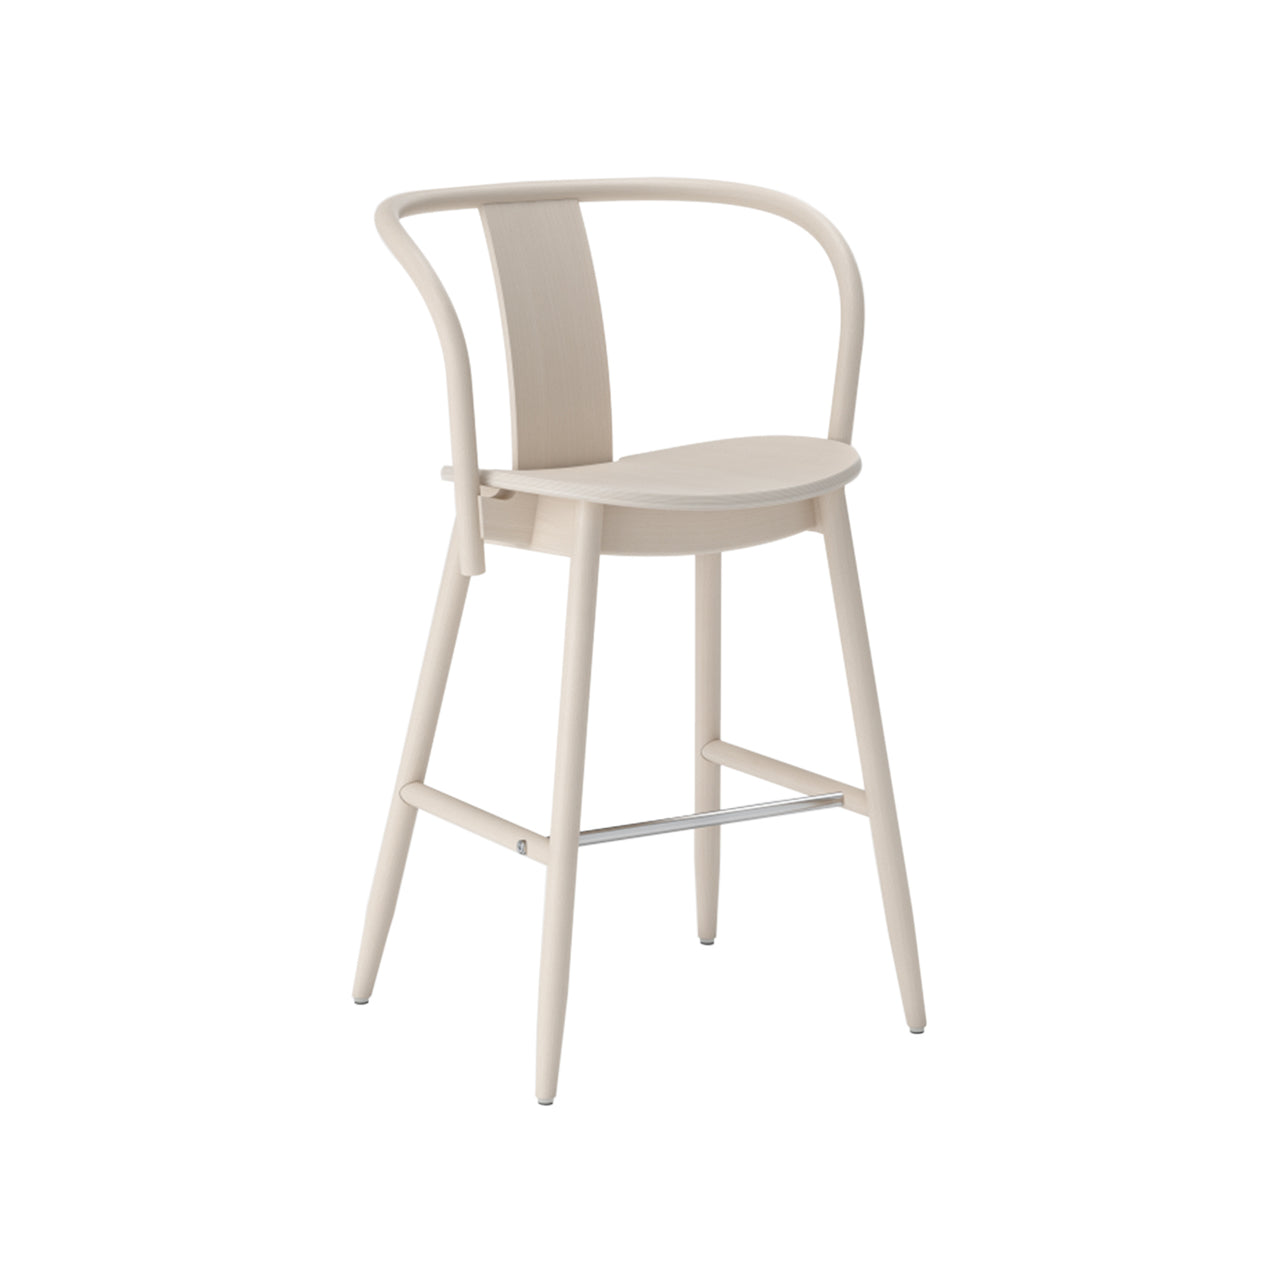 Icha Bar + Counter Chair: Counter + White Oiled Beech